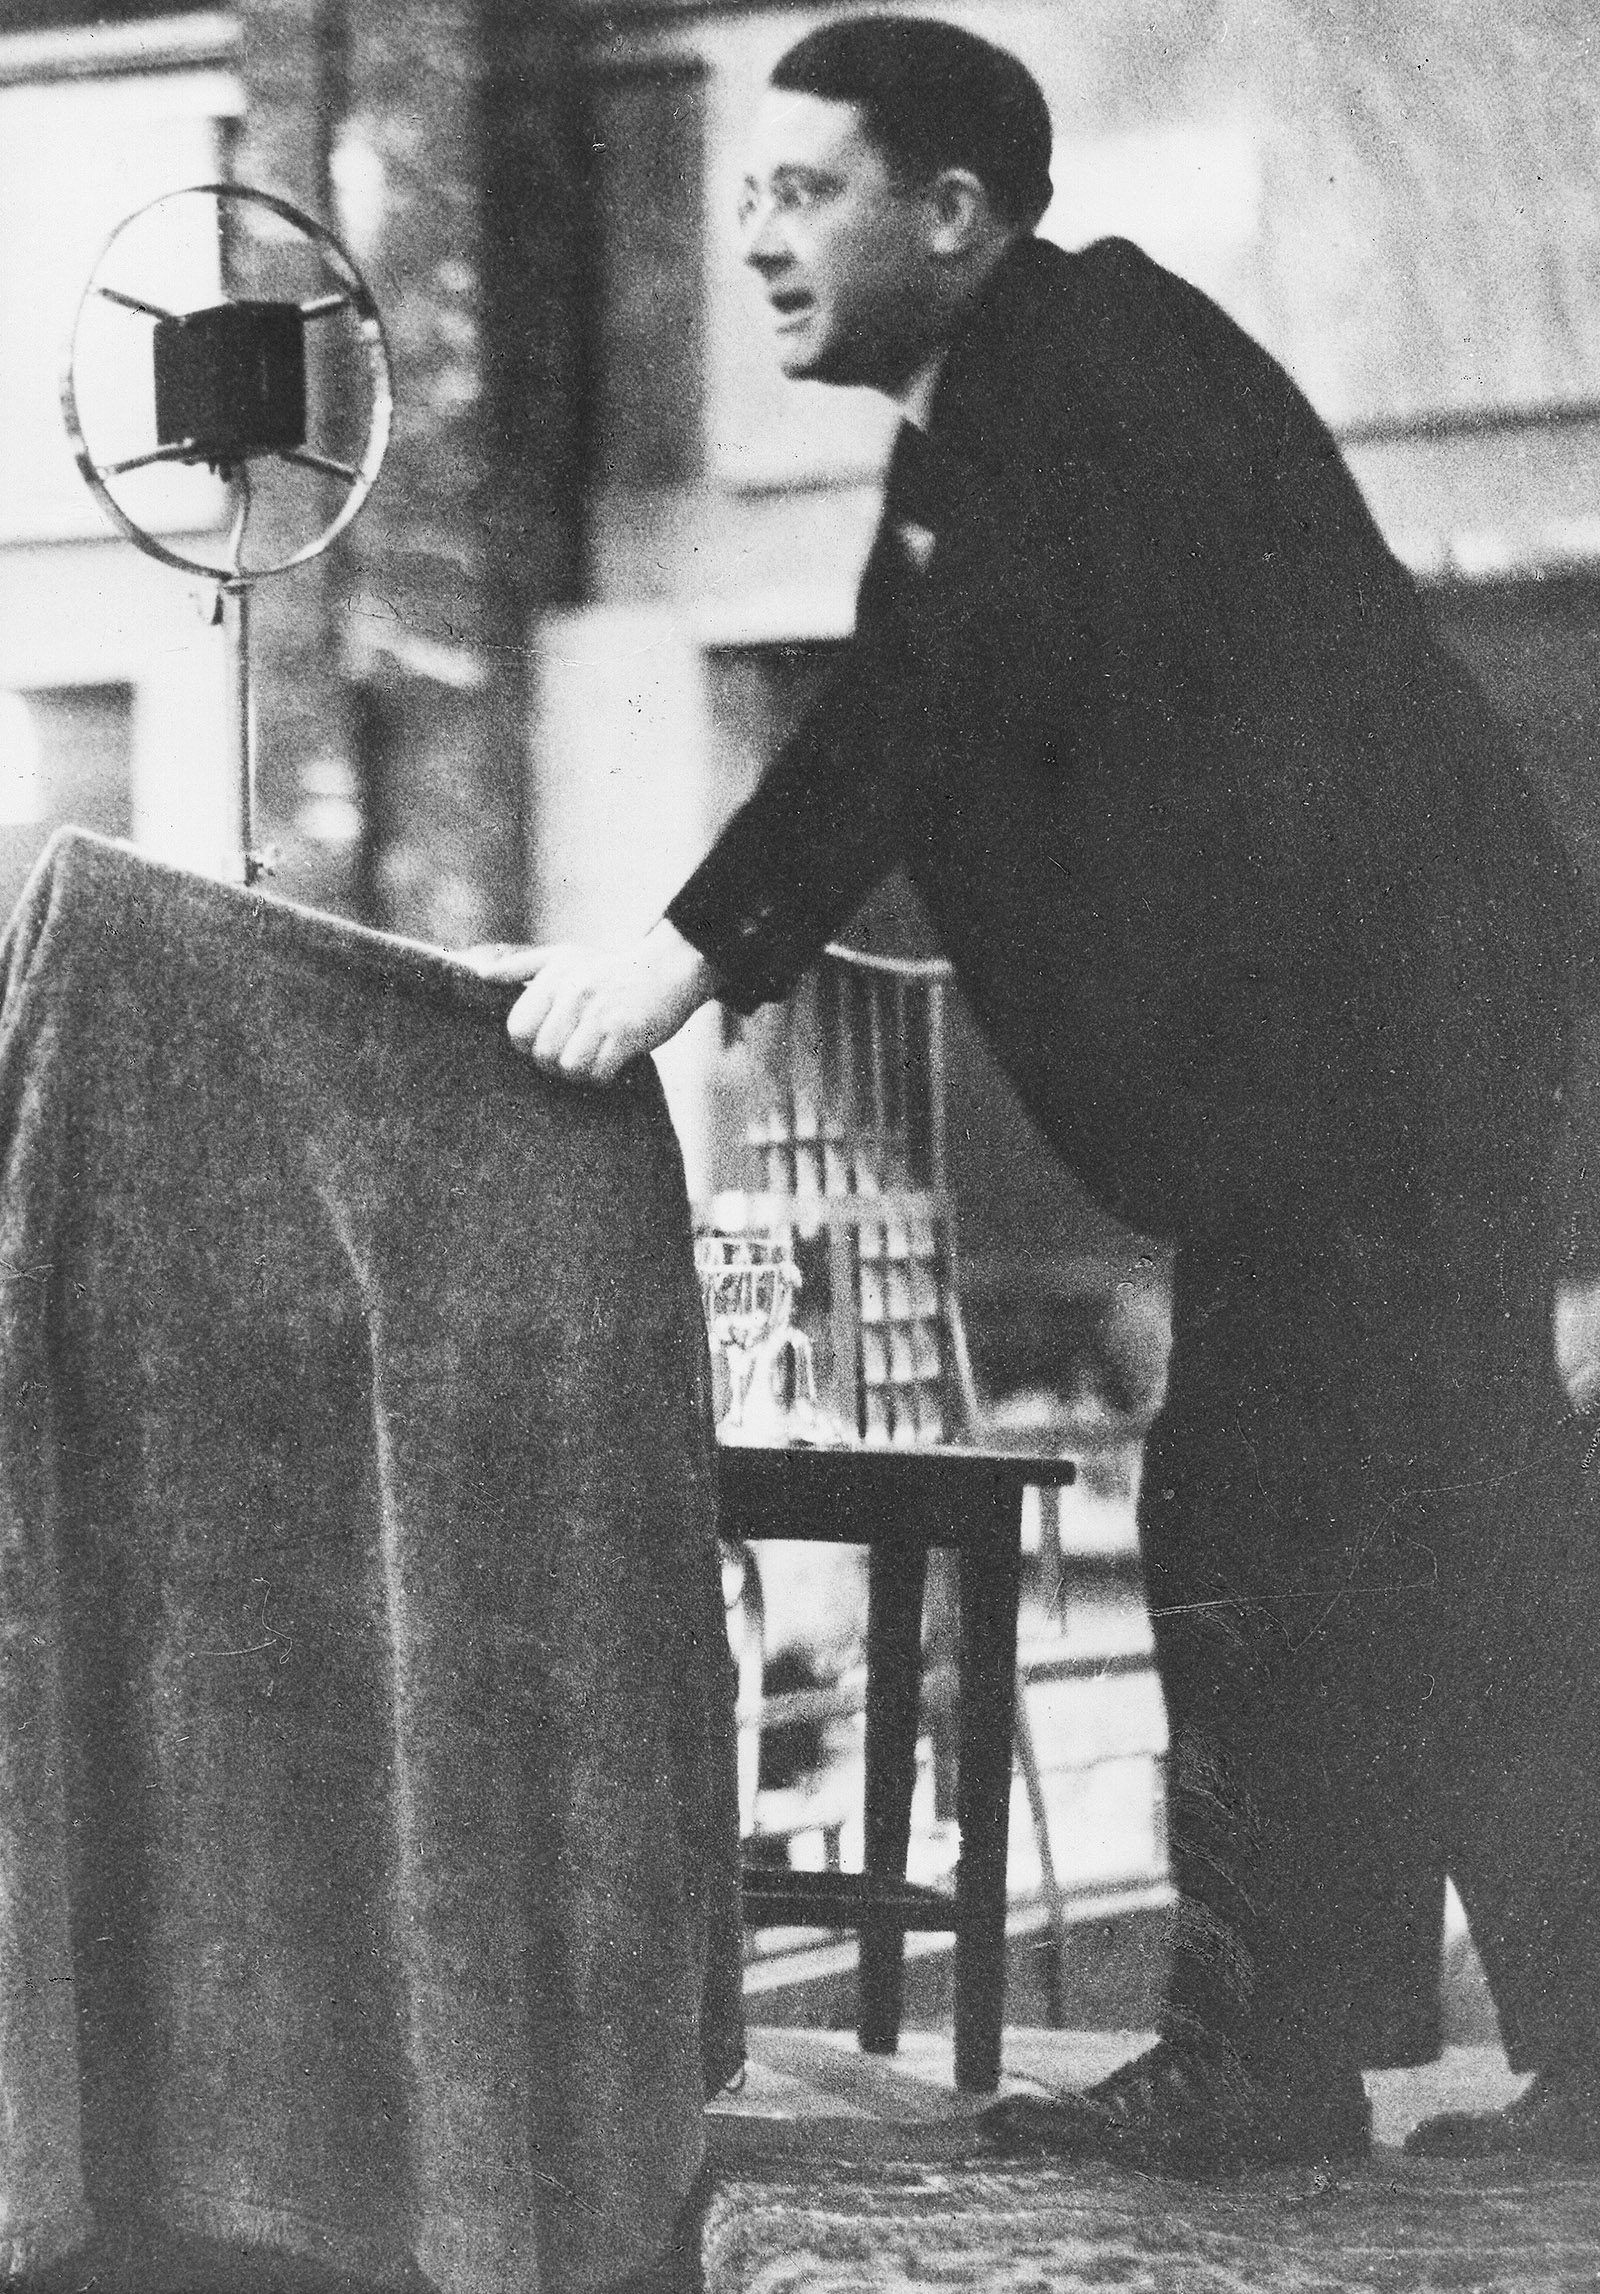 Nazi jurist Carl Schmitt speaking in Germany, 1930